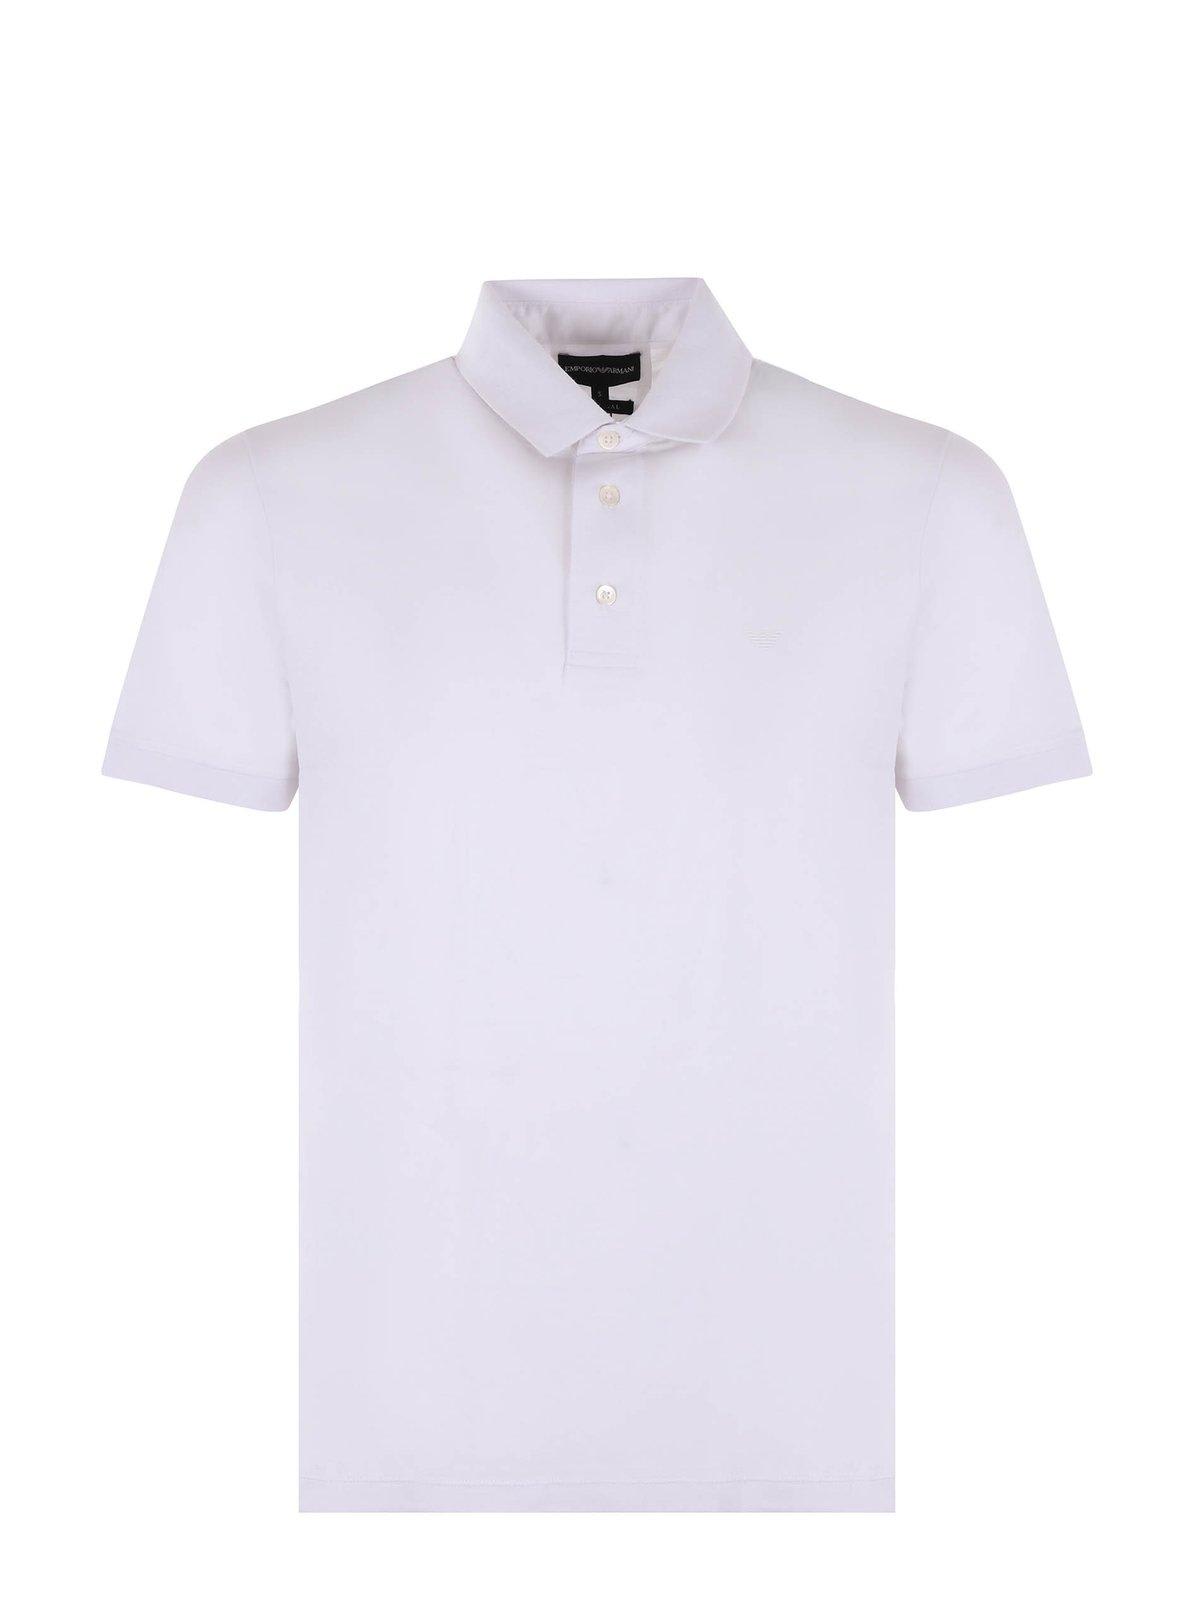 Emporio Armani Logo Printed Short Sleeved Polo Shirt